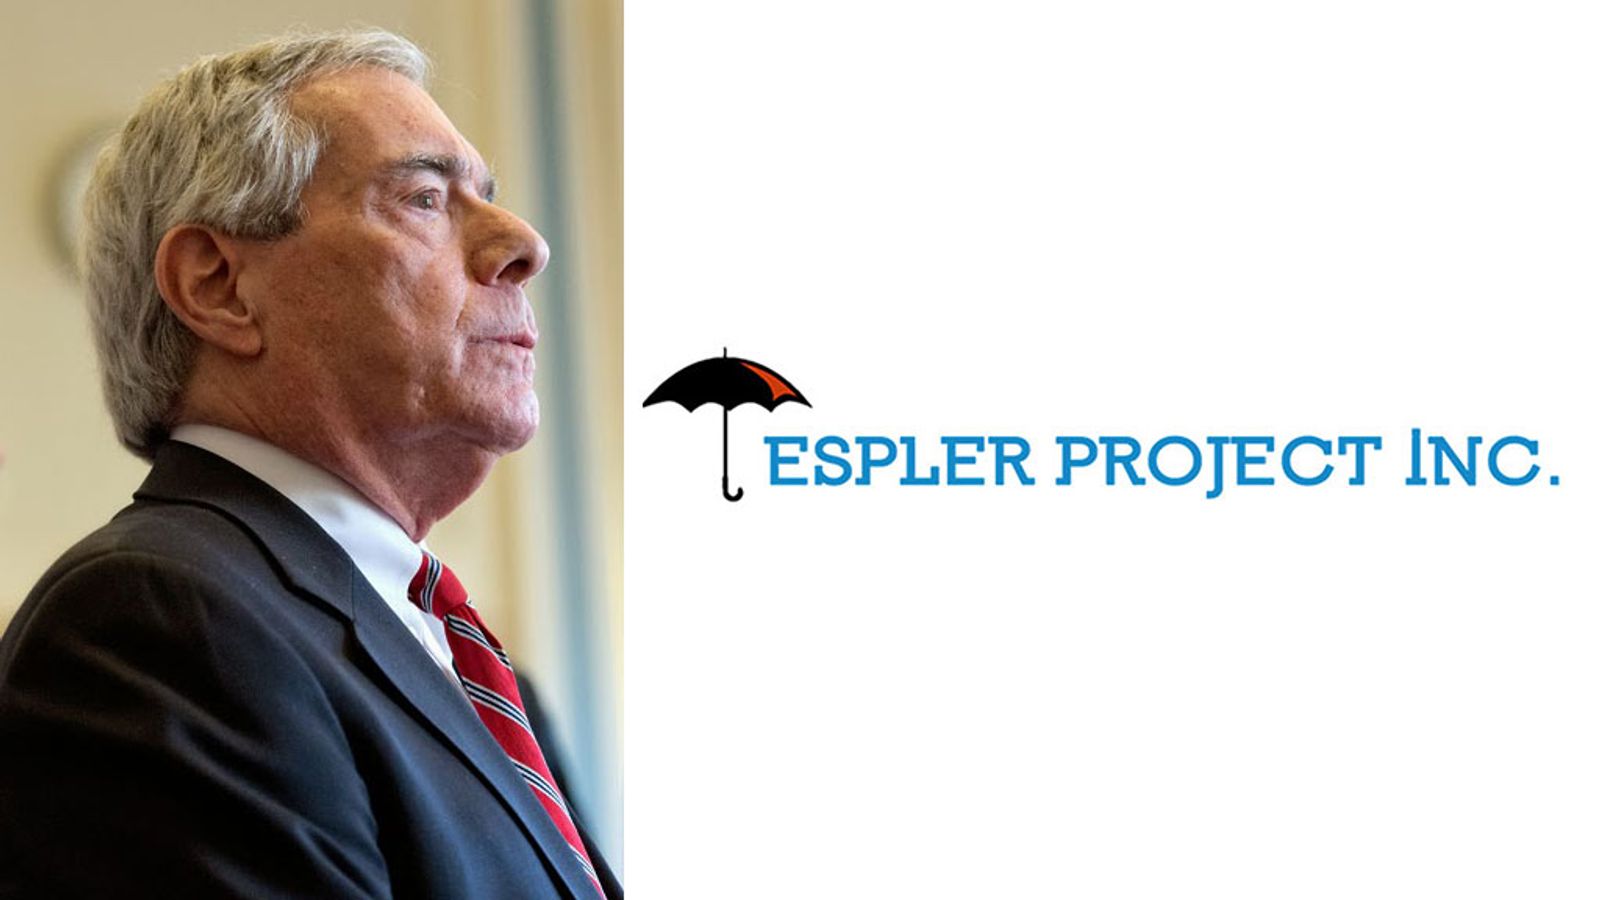 Legal Team to Change Strategy in 'ESPLERP v. Gascon'